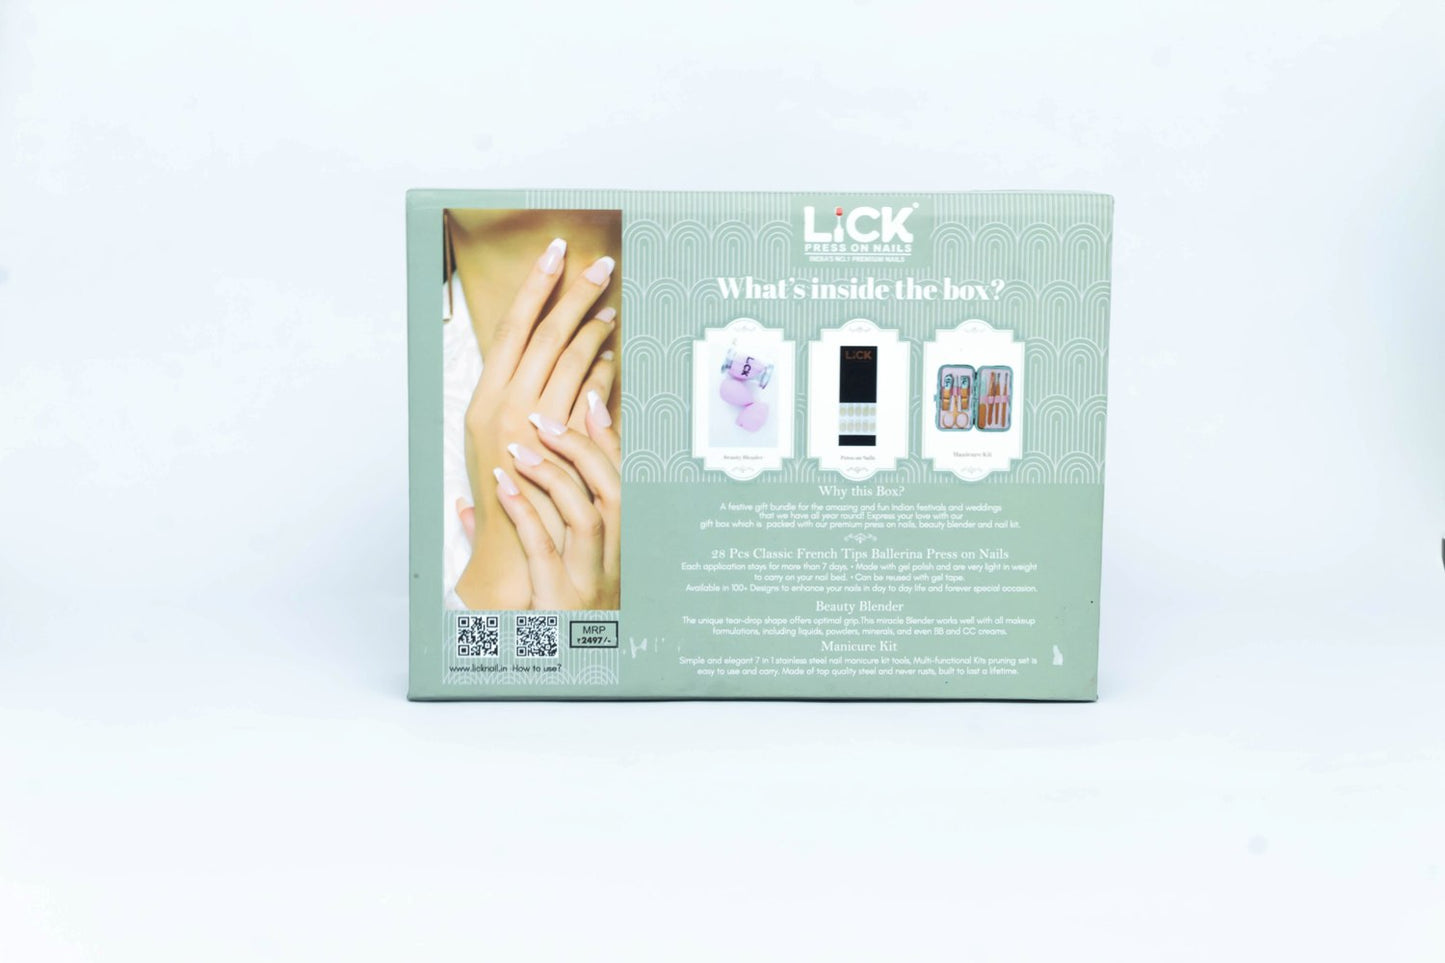 Festive Gift Box of Press on Nails, Beauty Blender & Manicure Pedicure Kit